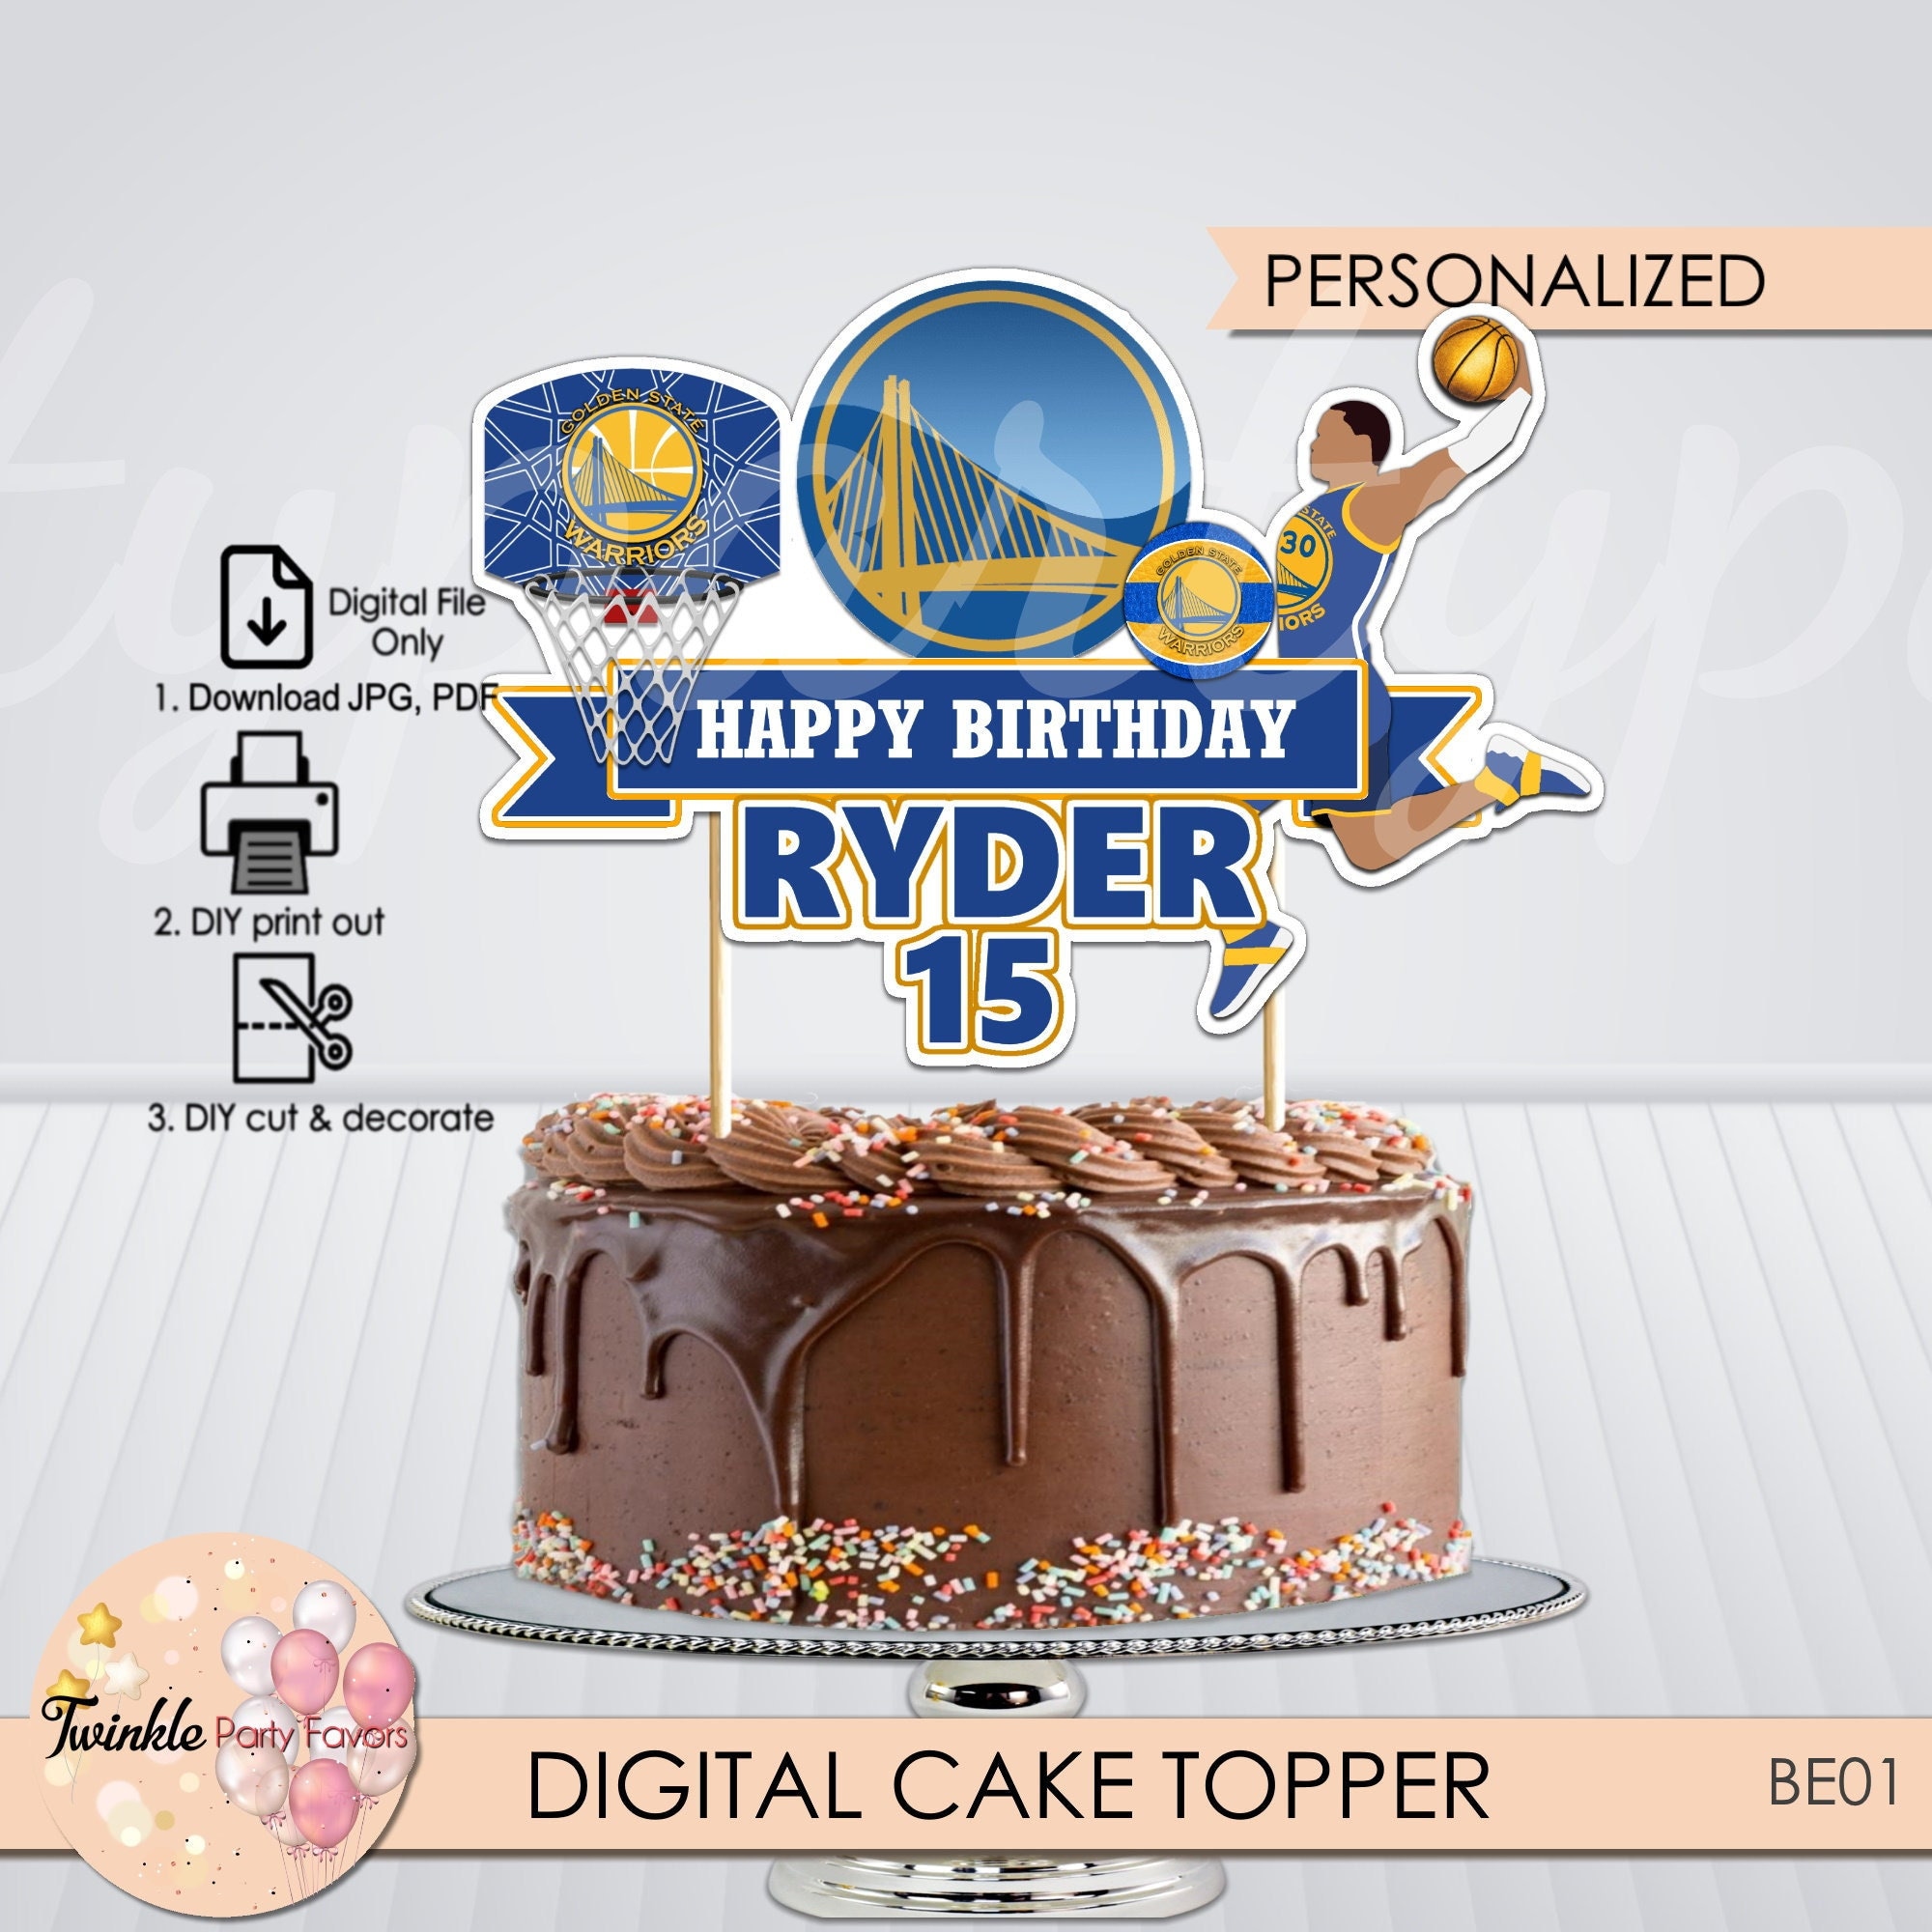 2 Tier Golden State Warrior Themed Birthday Cake 